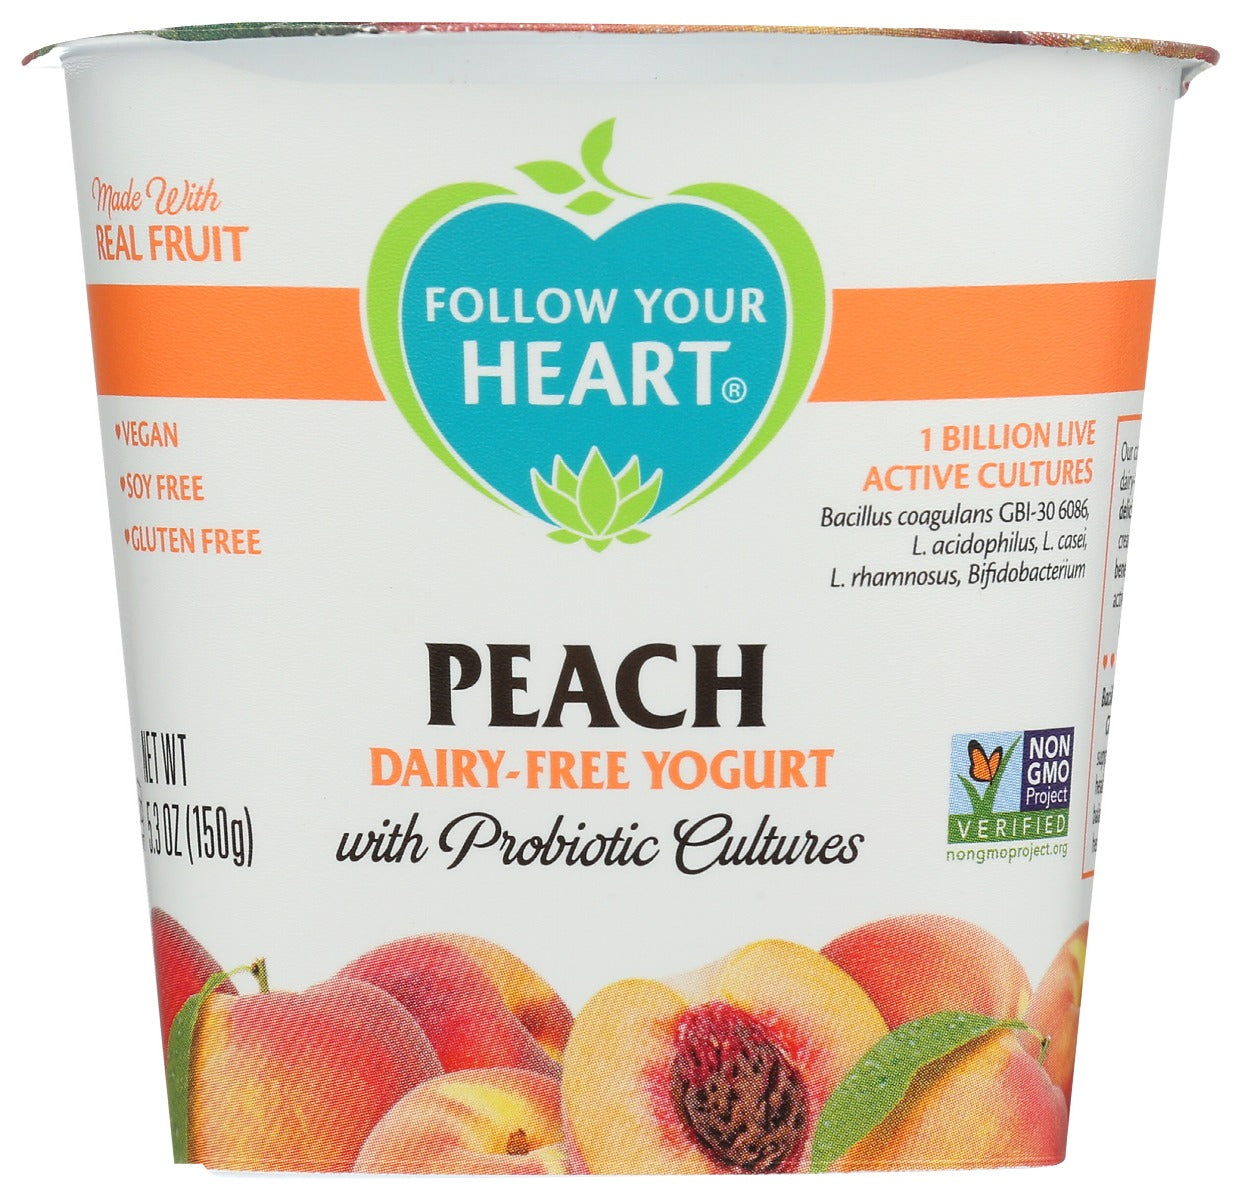 FOLLOW YOUR HEART: Peach Dairy-Free Yogurt, 5.3 oz - Vending Business Solutions